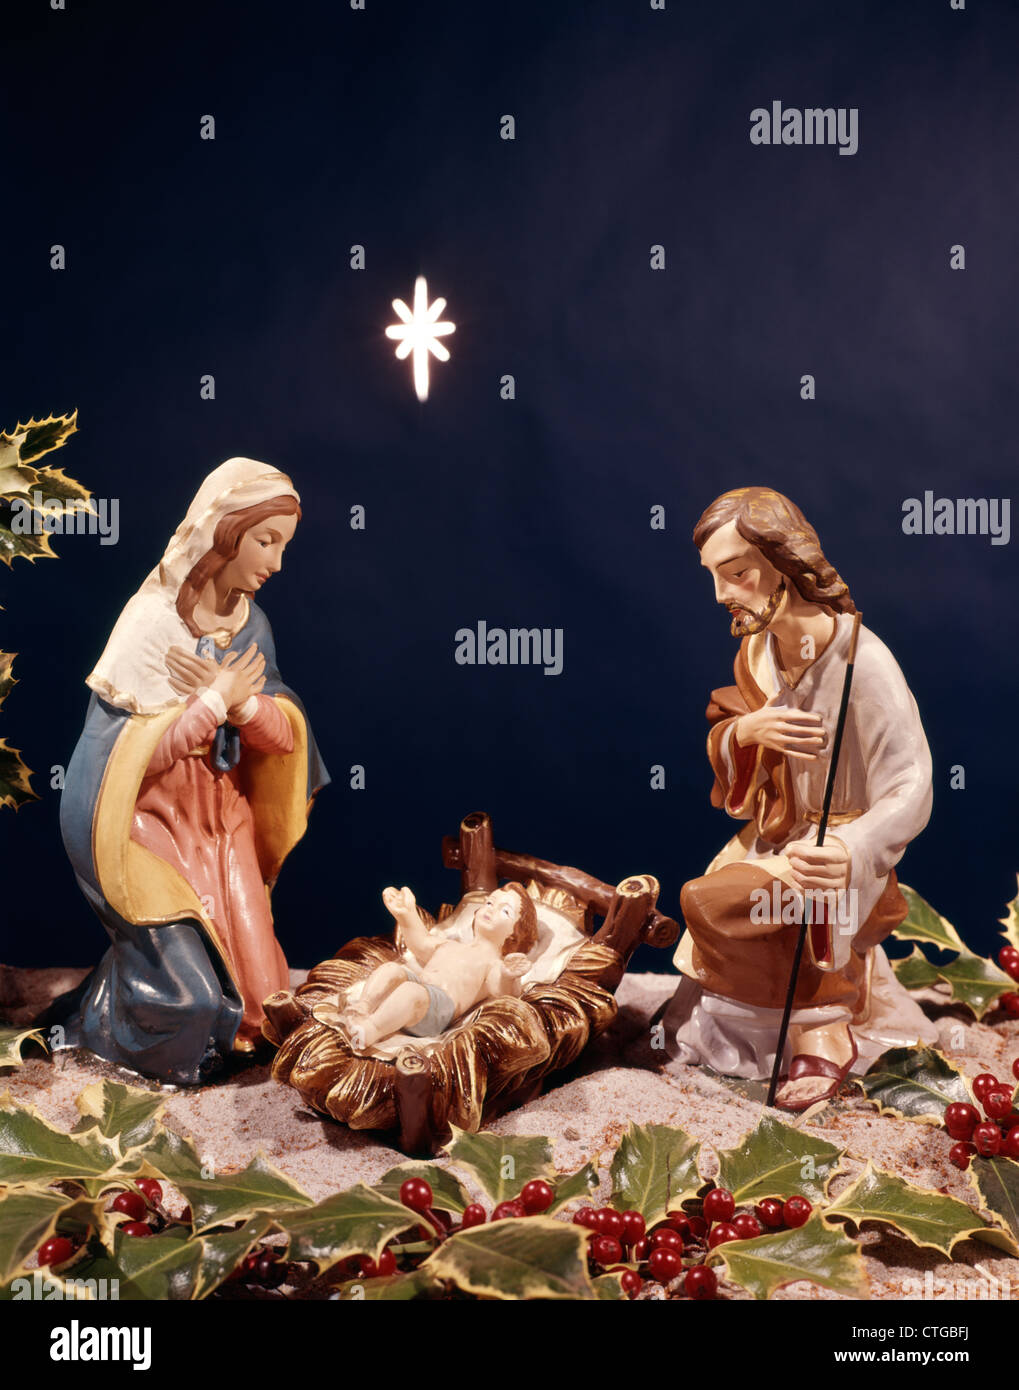 NATIVITY STAR BABY JESUS IN MANAGER MARY JOSEPH Stock Photo